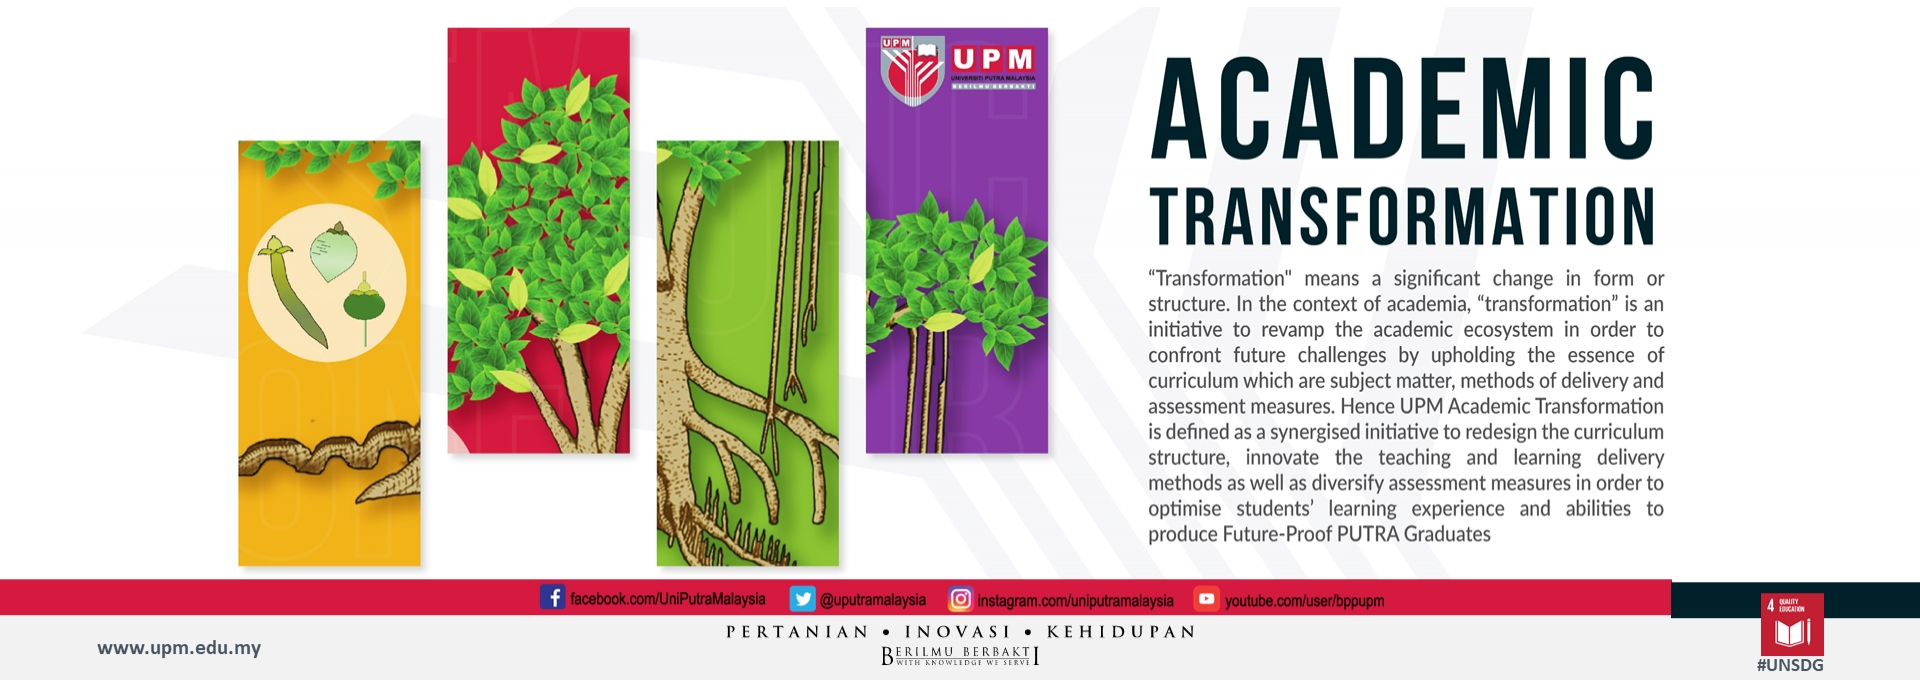 UPM Academic Transformation